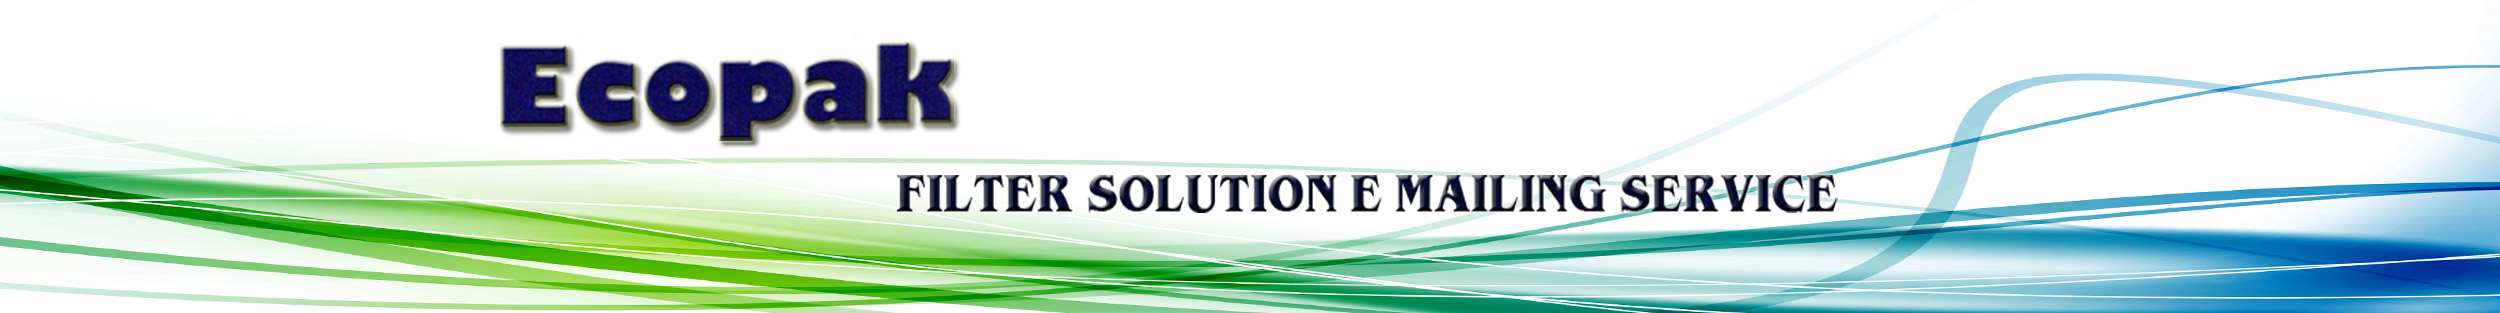 Ecopack, vendita prefiltri e filtri per impianti aria, turbine a gas, motori elettrici, generatori di corrente, cabine di verniciatura